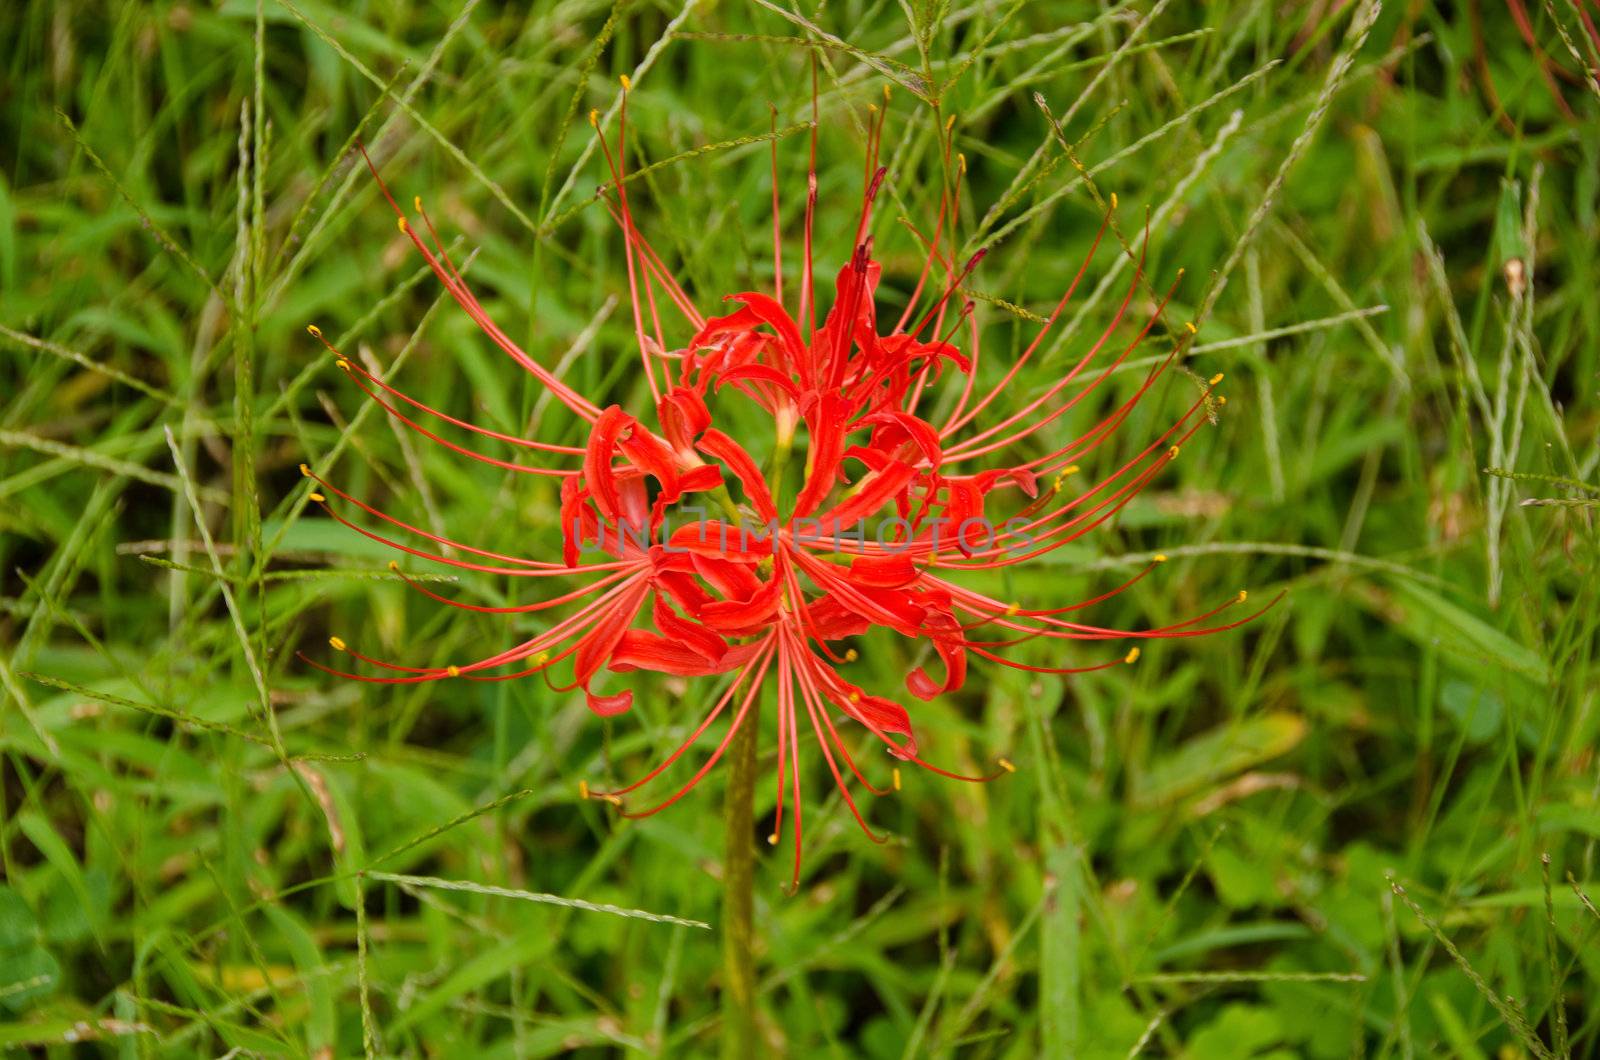 Red spider lily, Lycoris radiata by Arrxxx